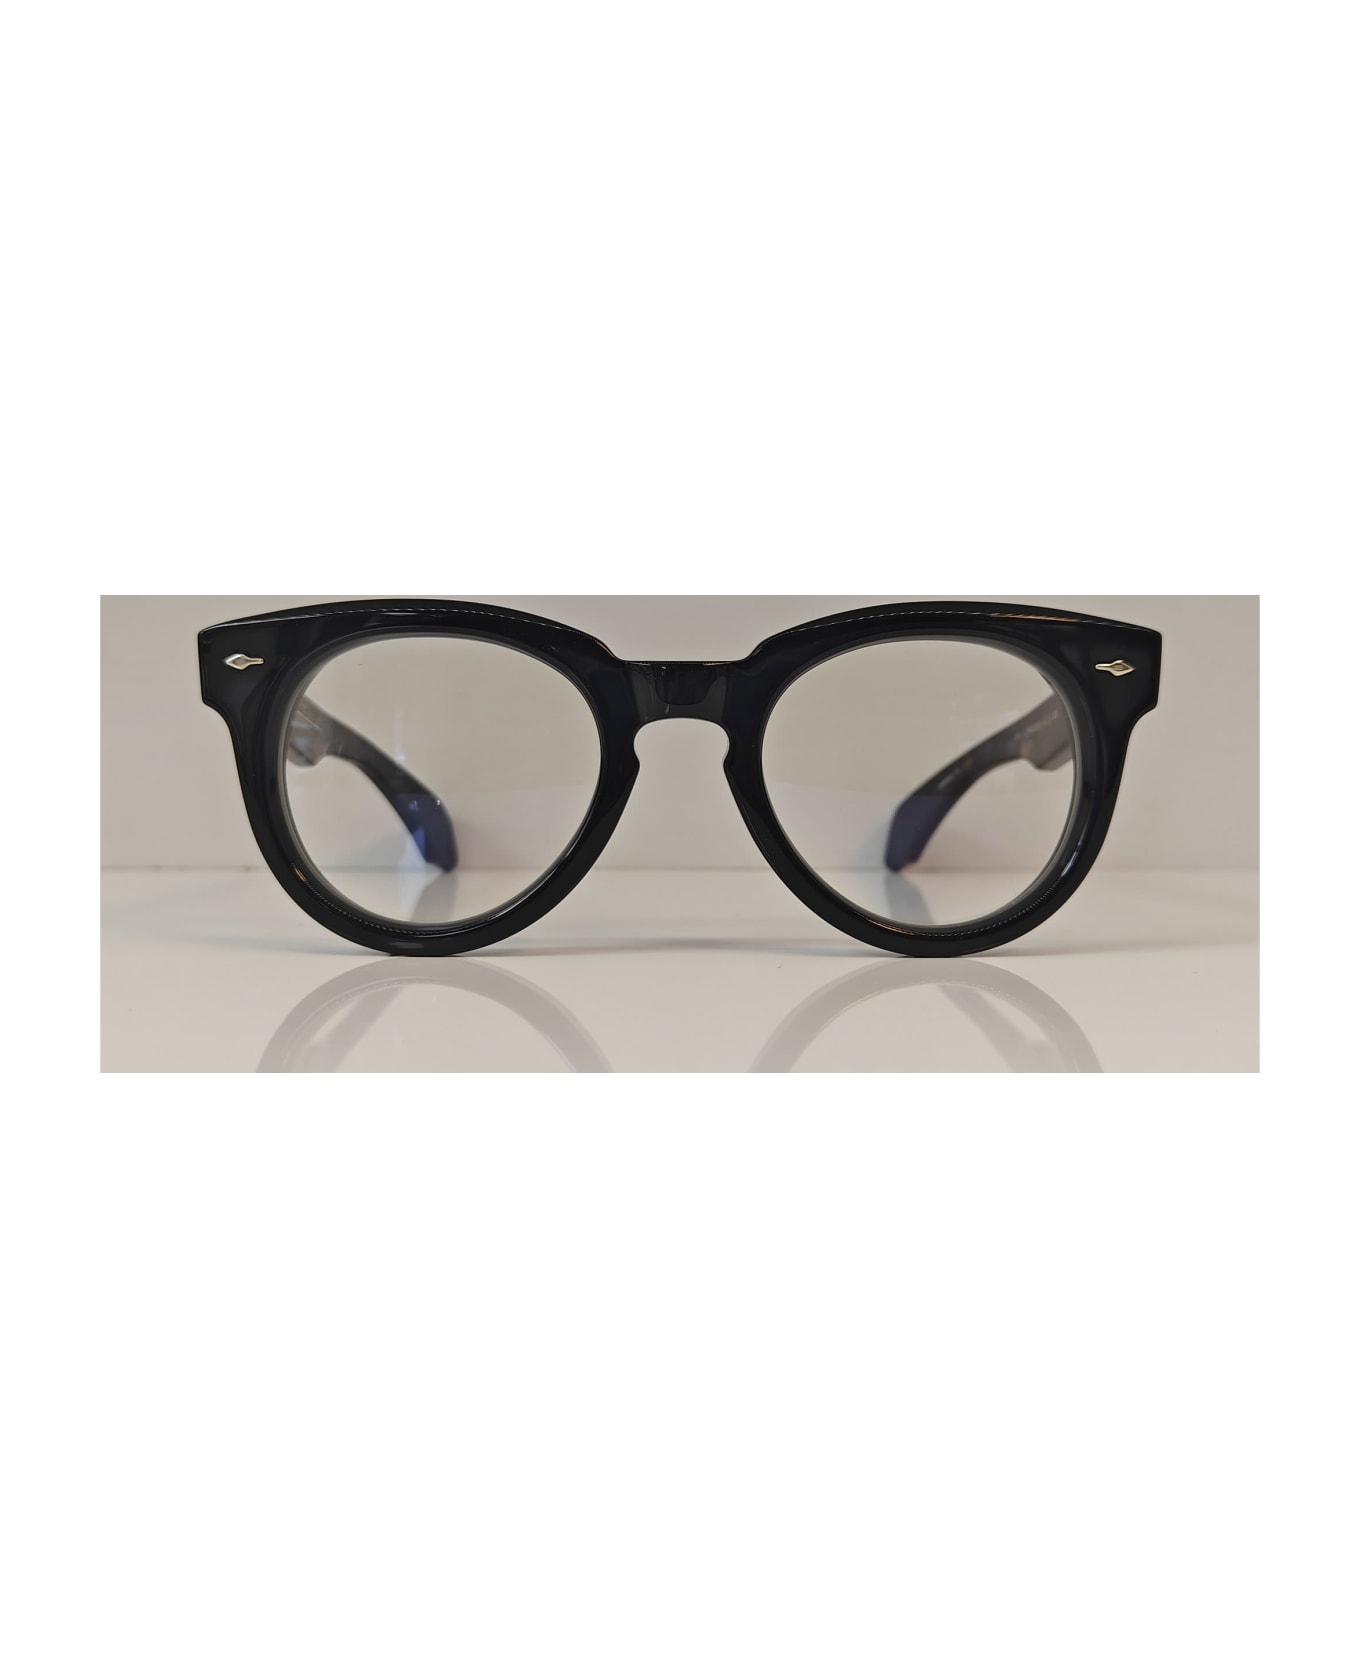 Jacques Marie Mage Fontainebleau 2 - Noir 7 Rx Glasses - black/silver アイウェア